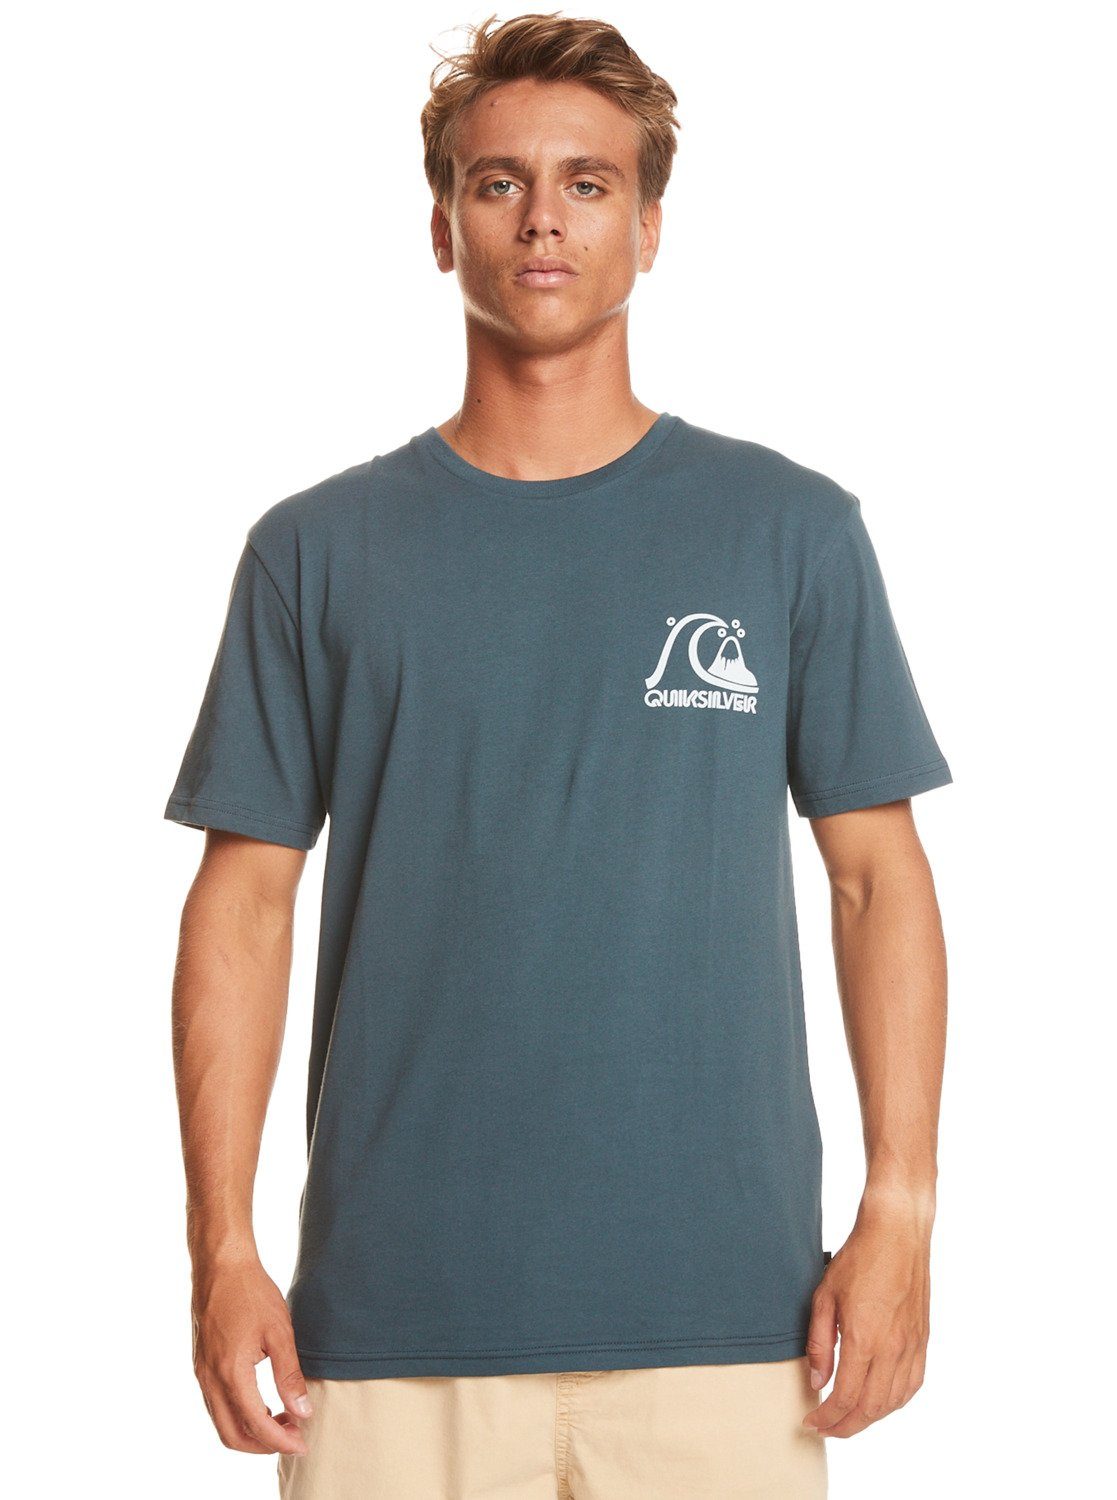 The T-Shirt Midnight Quiksilver Original Navy